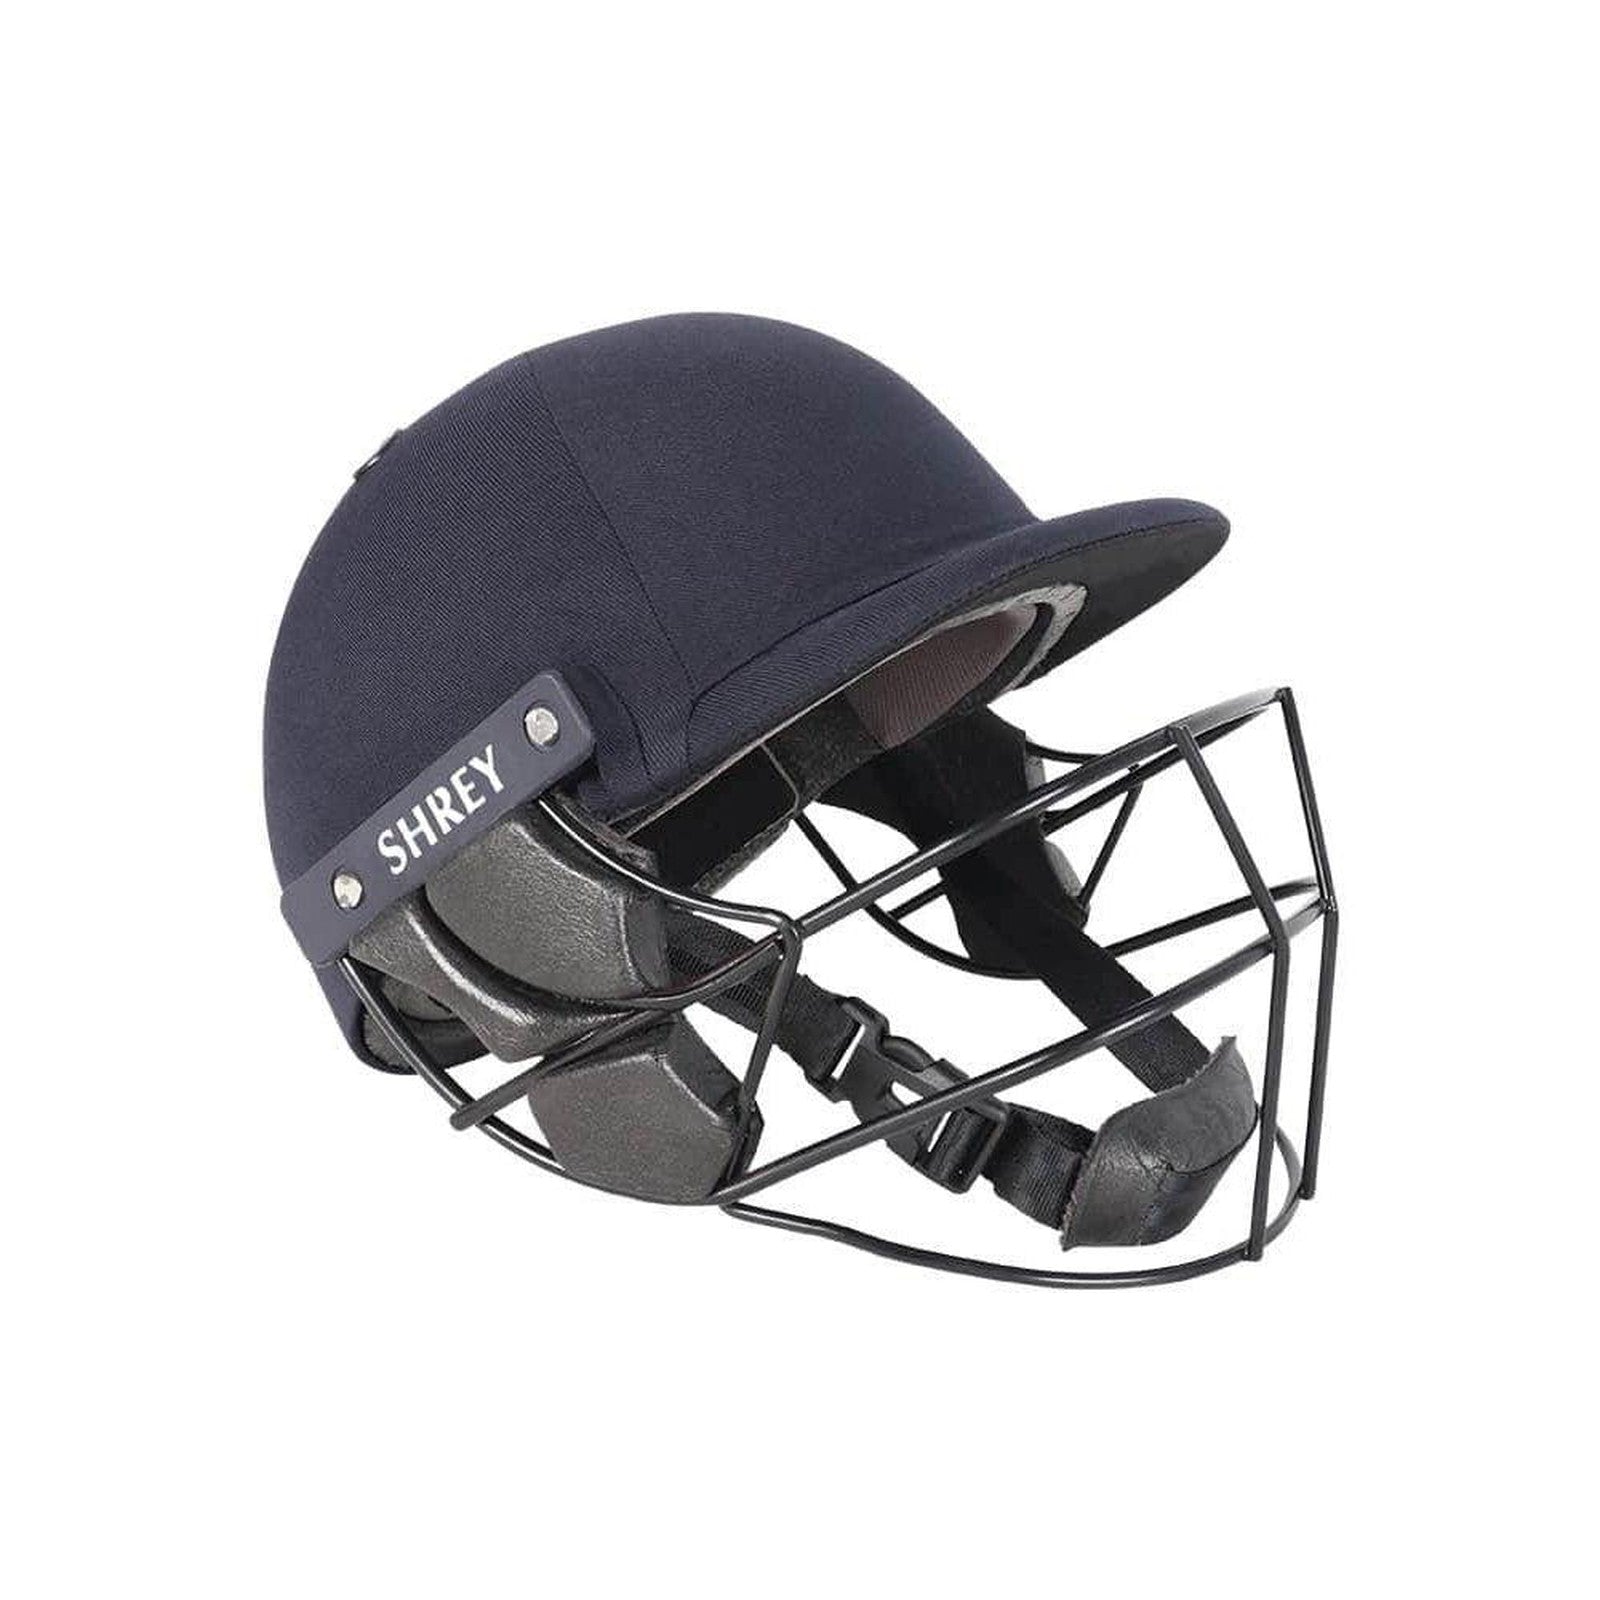 Shrey Armor 2.0 Cricket Helmet With Mild Steel Visor - Navy Senior